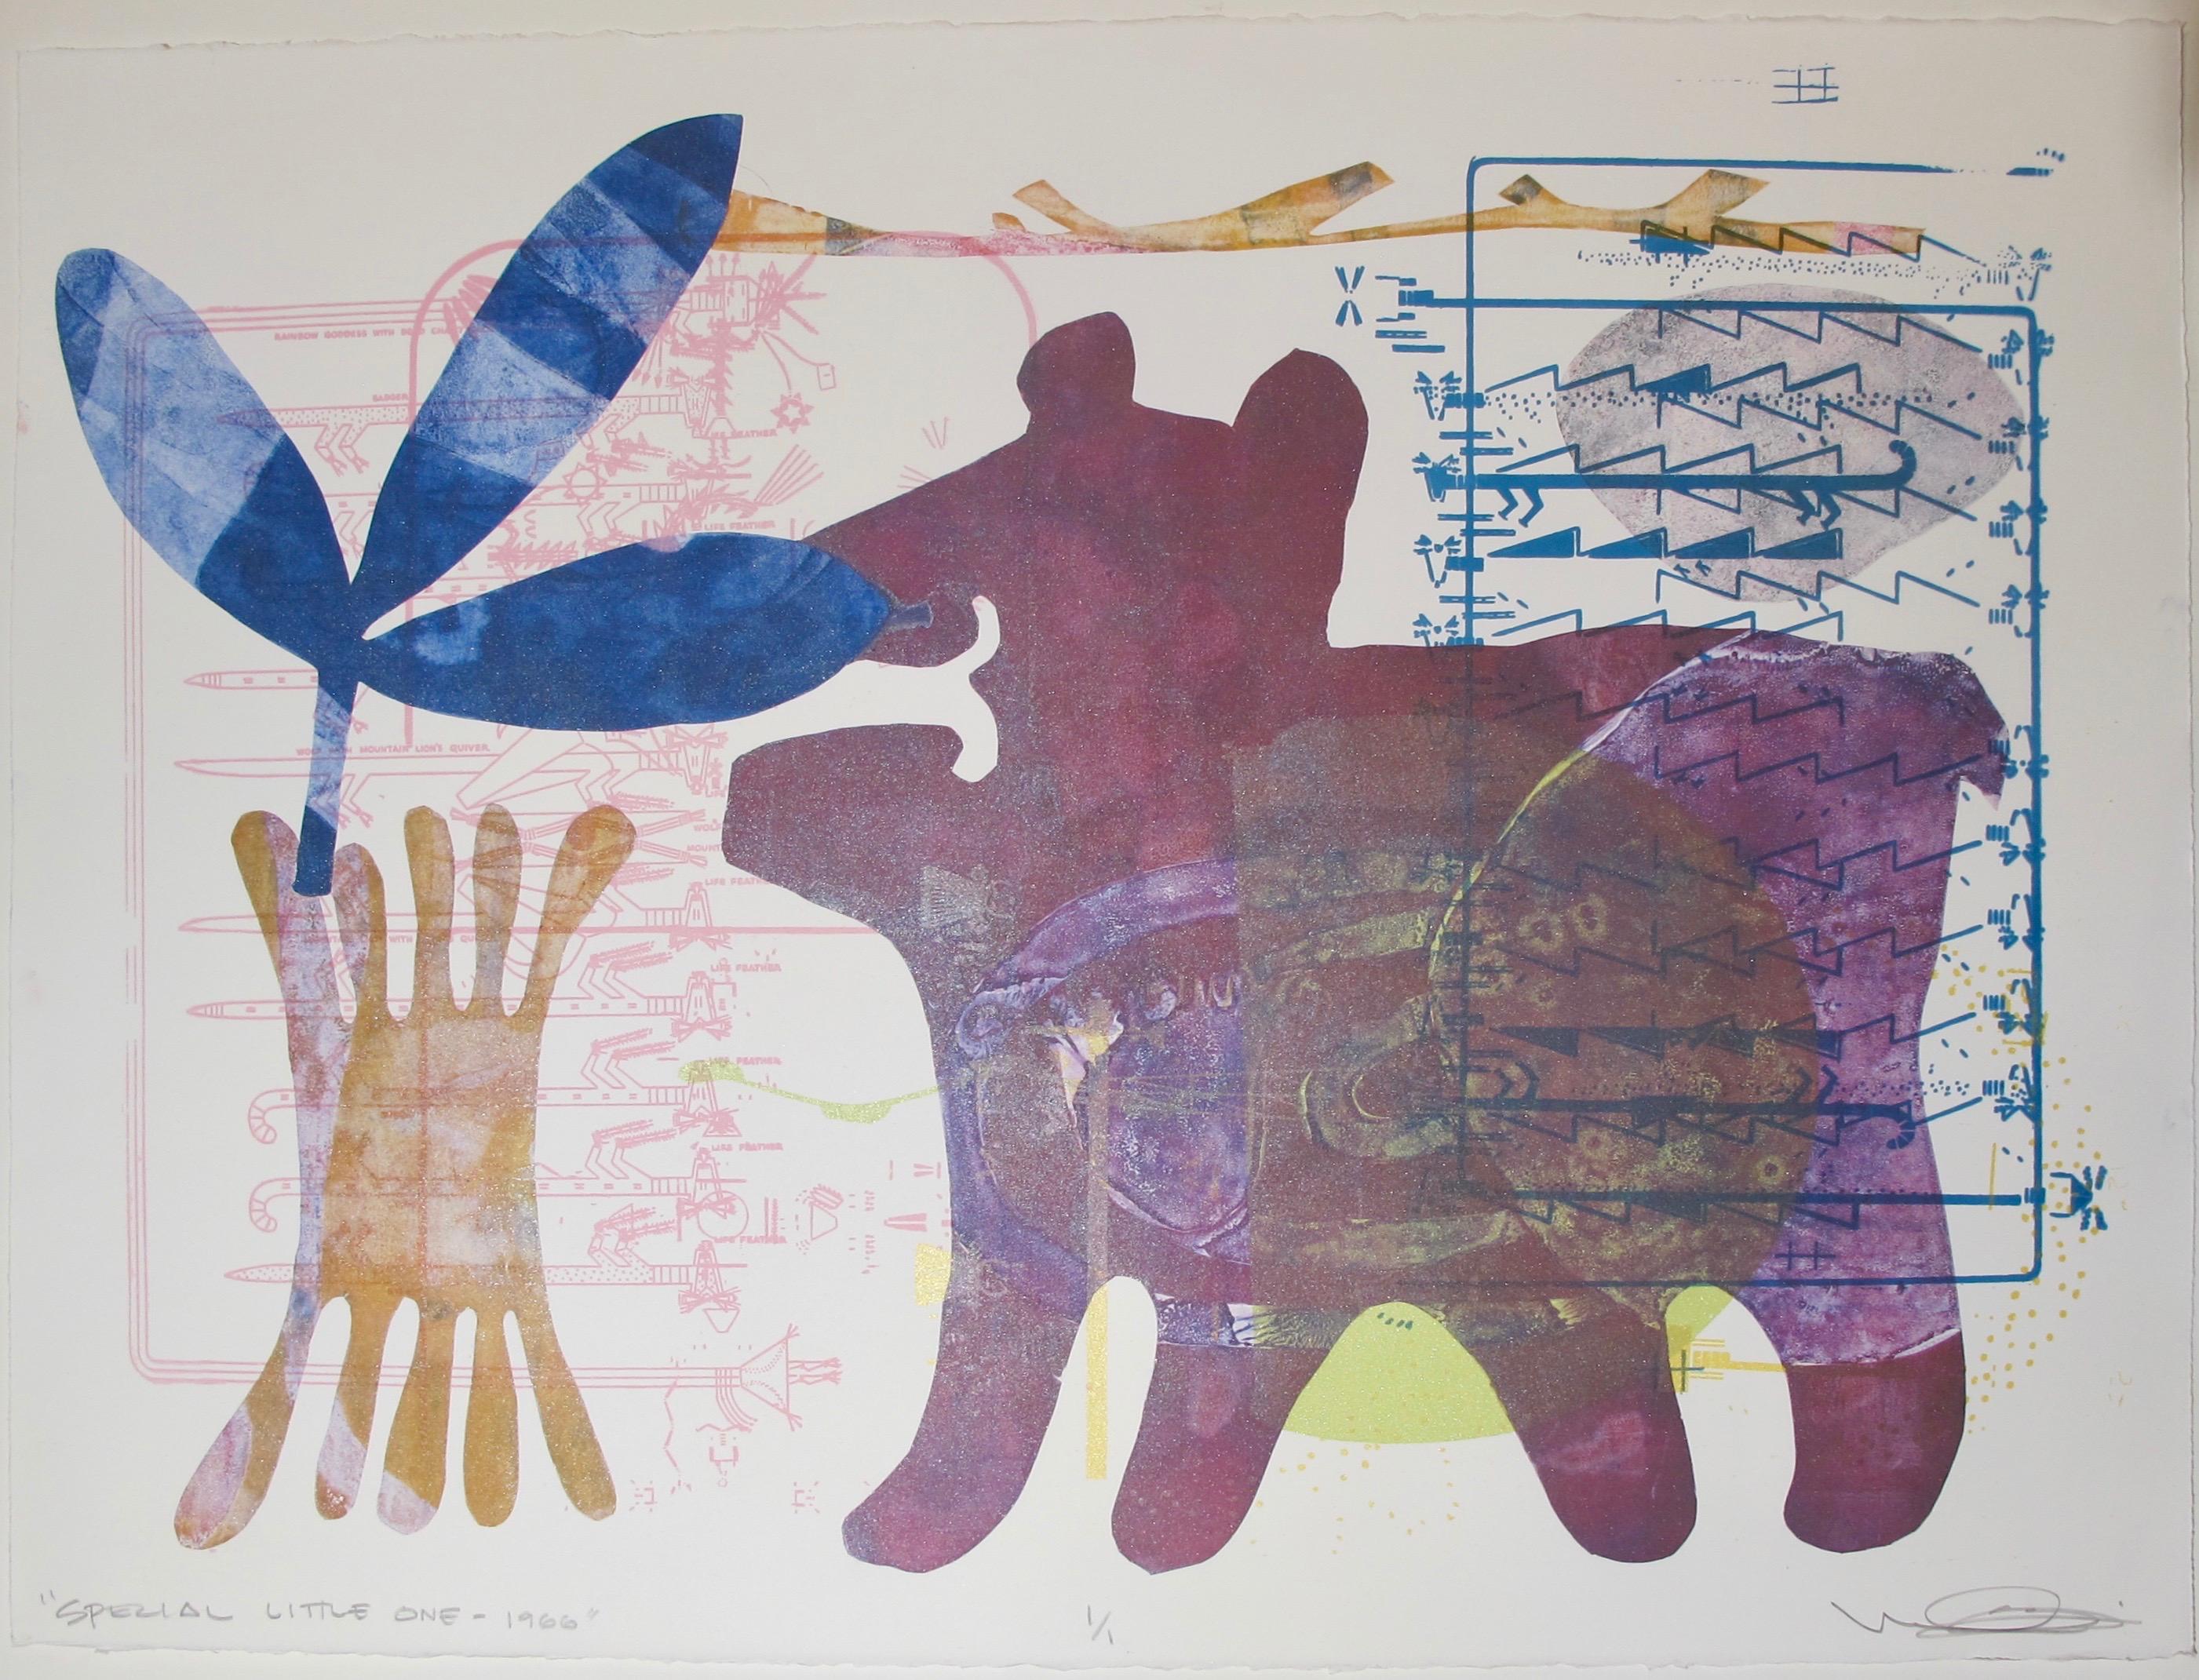 Special Little One-1966, Melanie Yazzie Navajo monotype painting paper bear blue